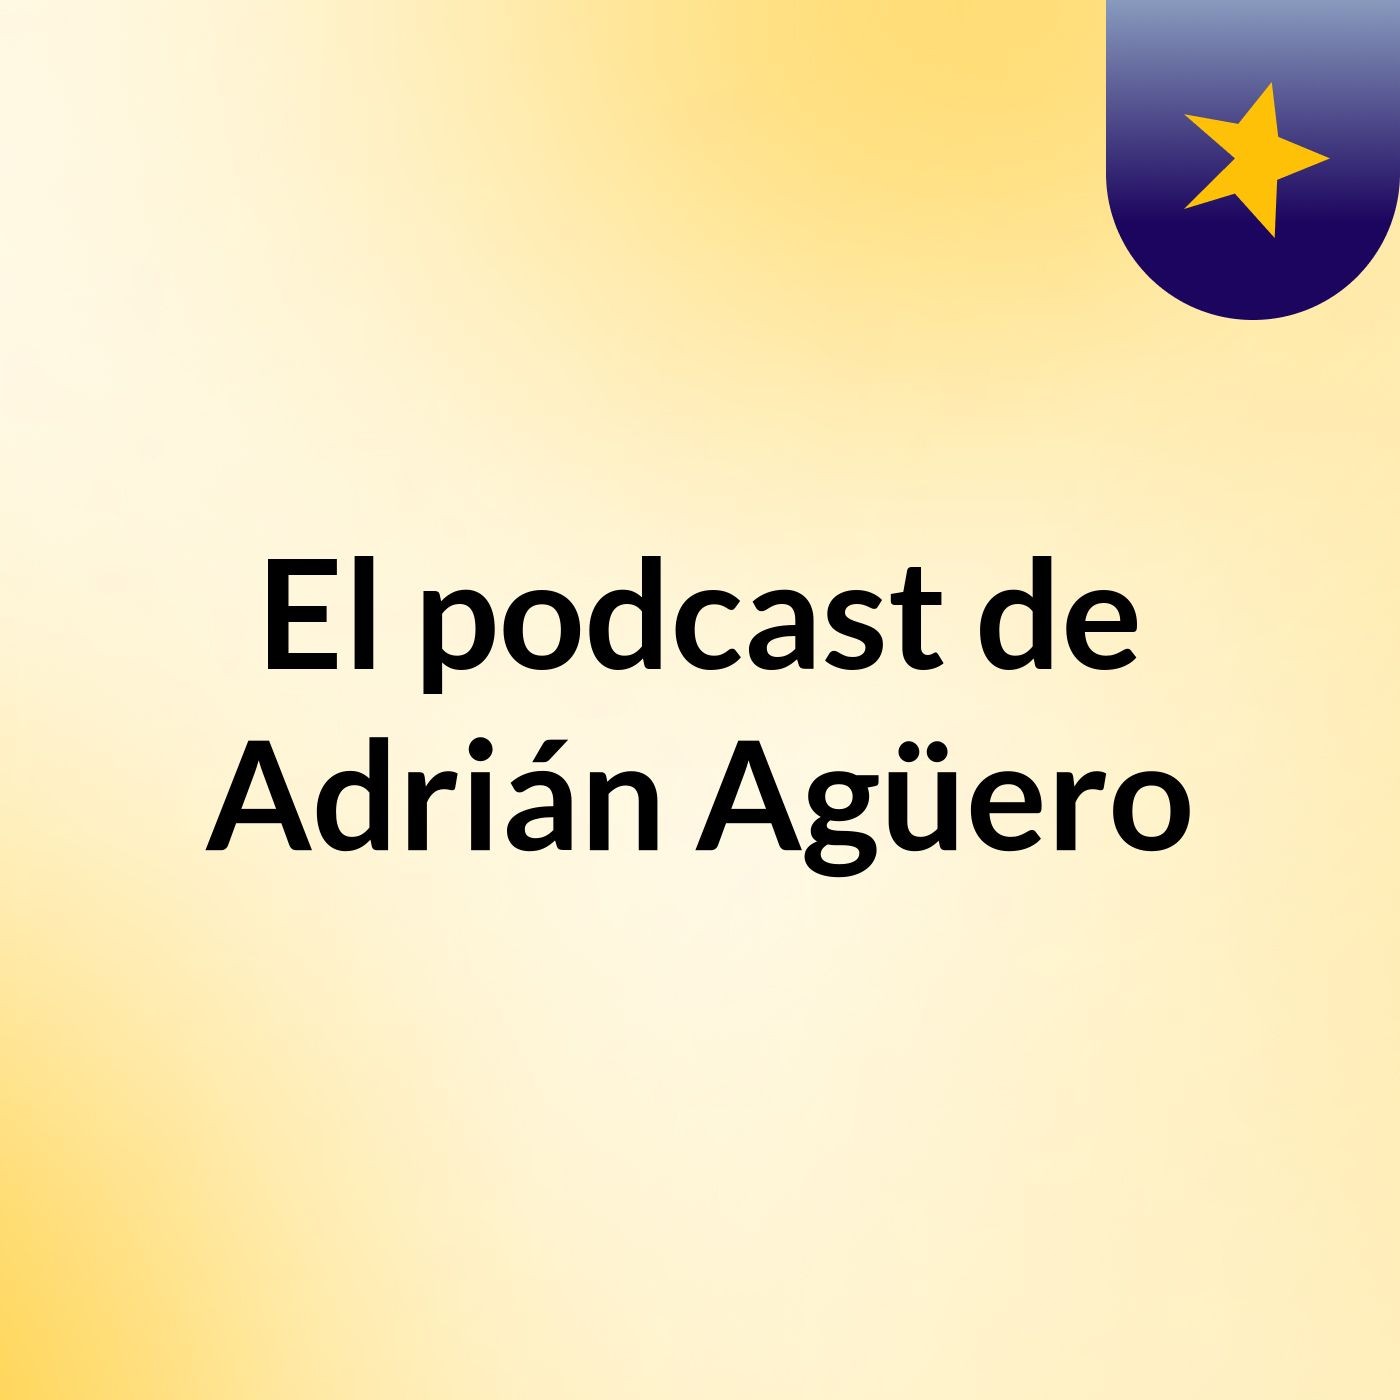 El podcast de Adrián Agüero